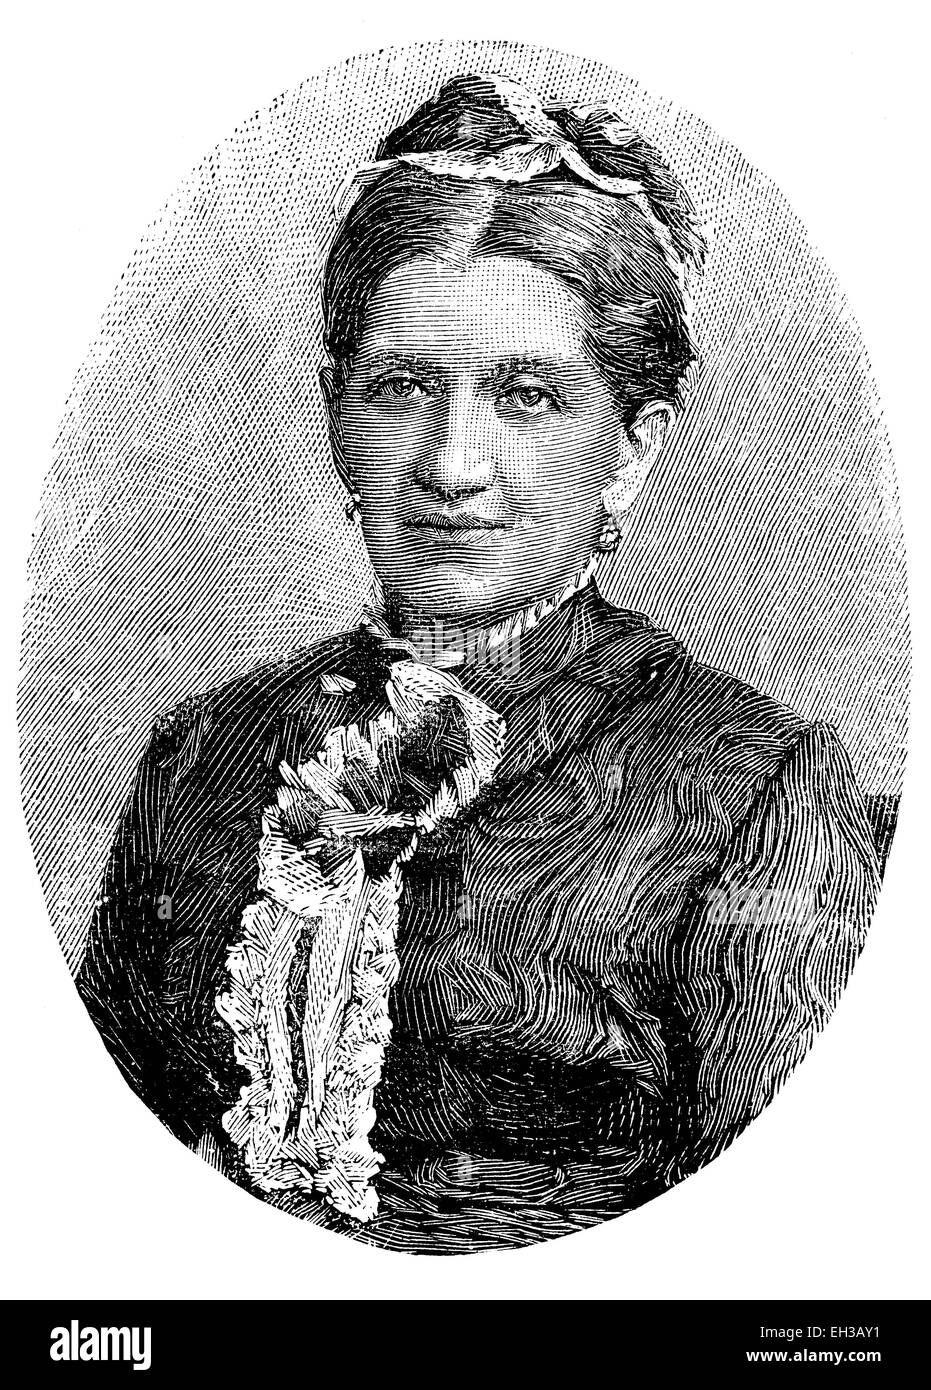 Friederike Charlotte Johanna Dorothea Eleonore von Bismarck, n ?e Von Puttkamer, 1824 - 1894, l'épouse d'Otto von Bismarck, gravure sur bois, 1880 Banque D'Images